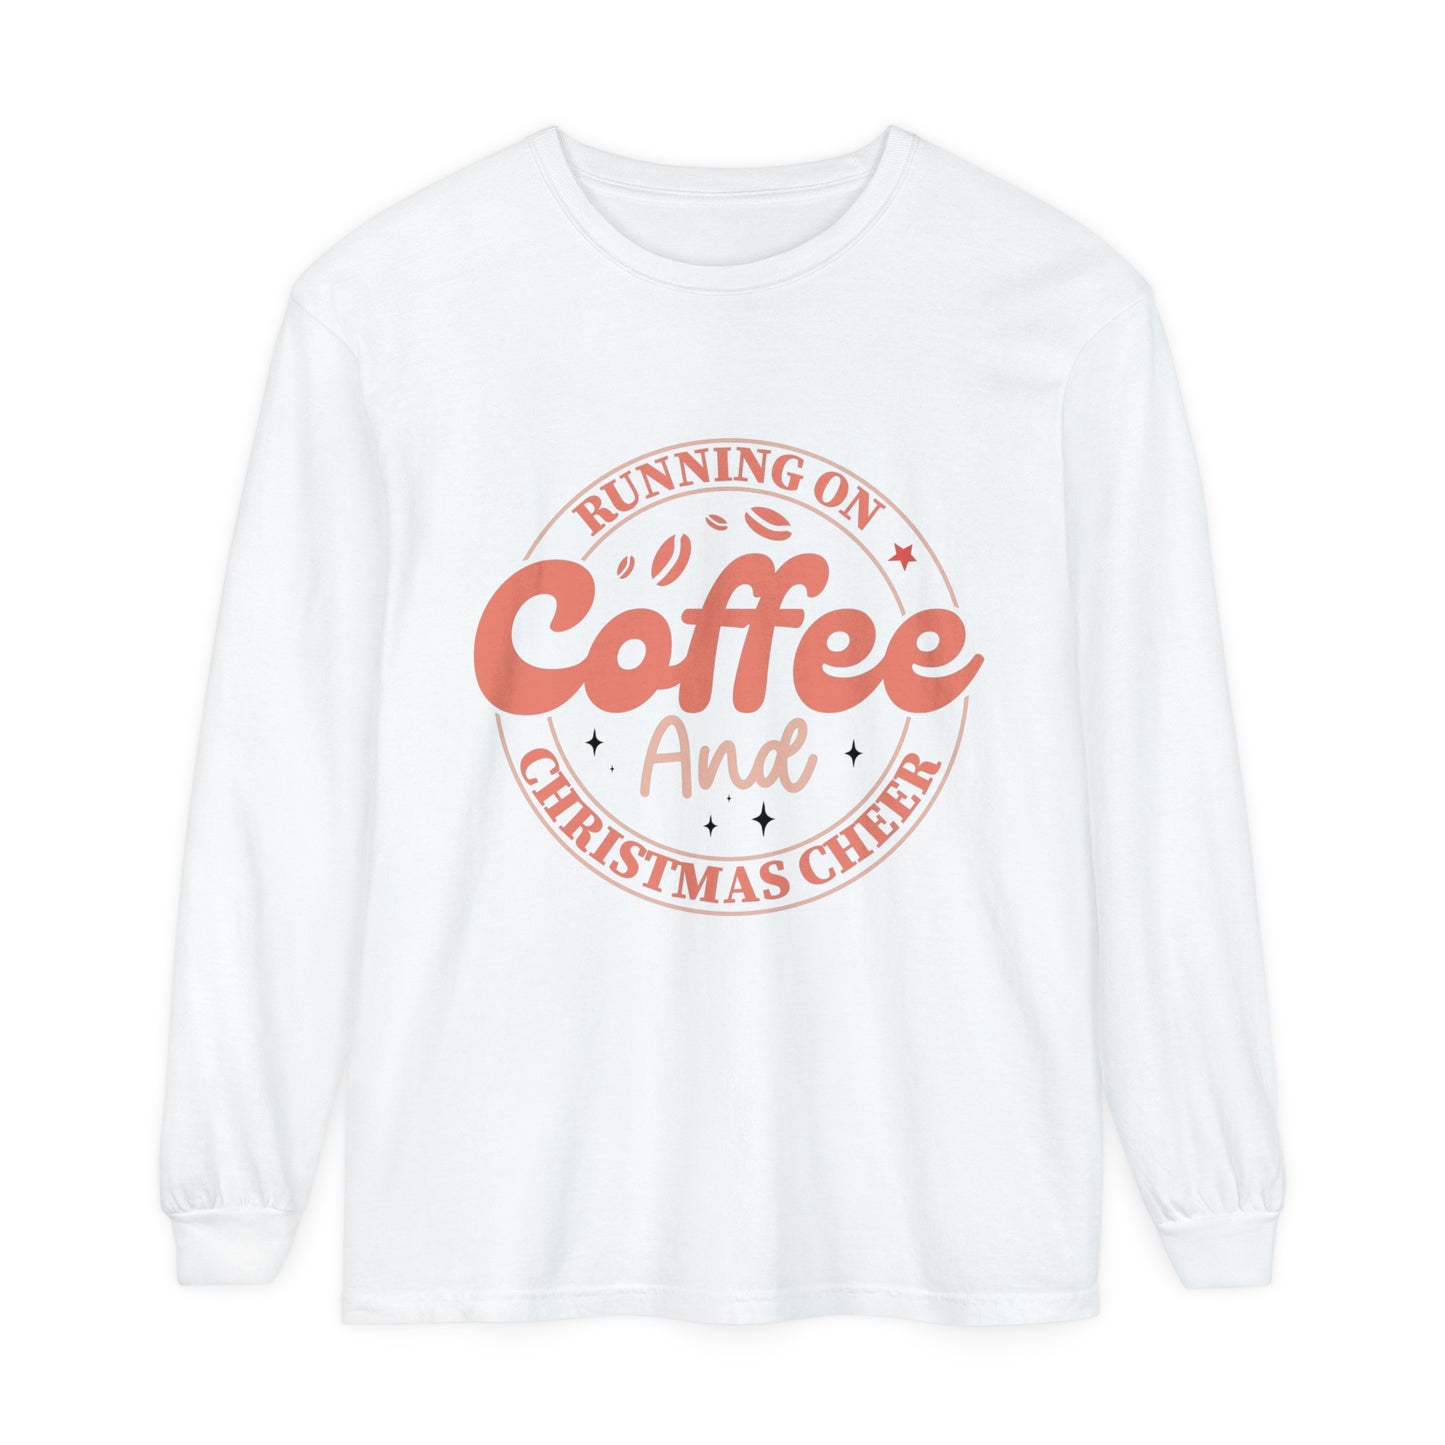 Coffee and Christmas Cheer Women's Christmas Holiday Loose Long Sleeve T-Shirt